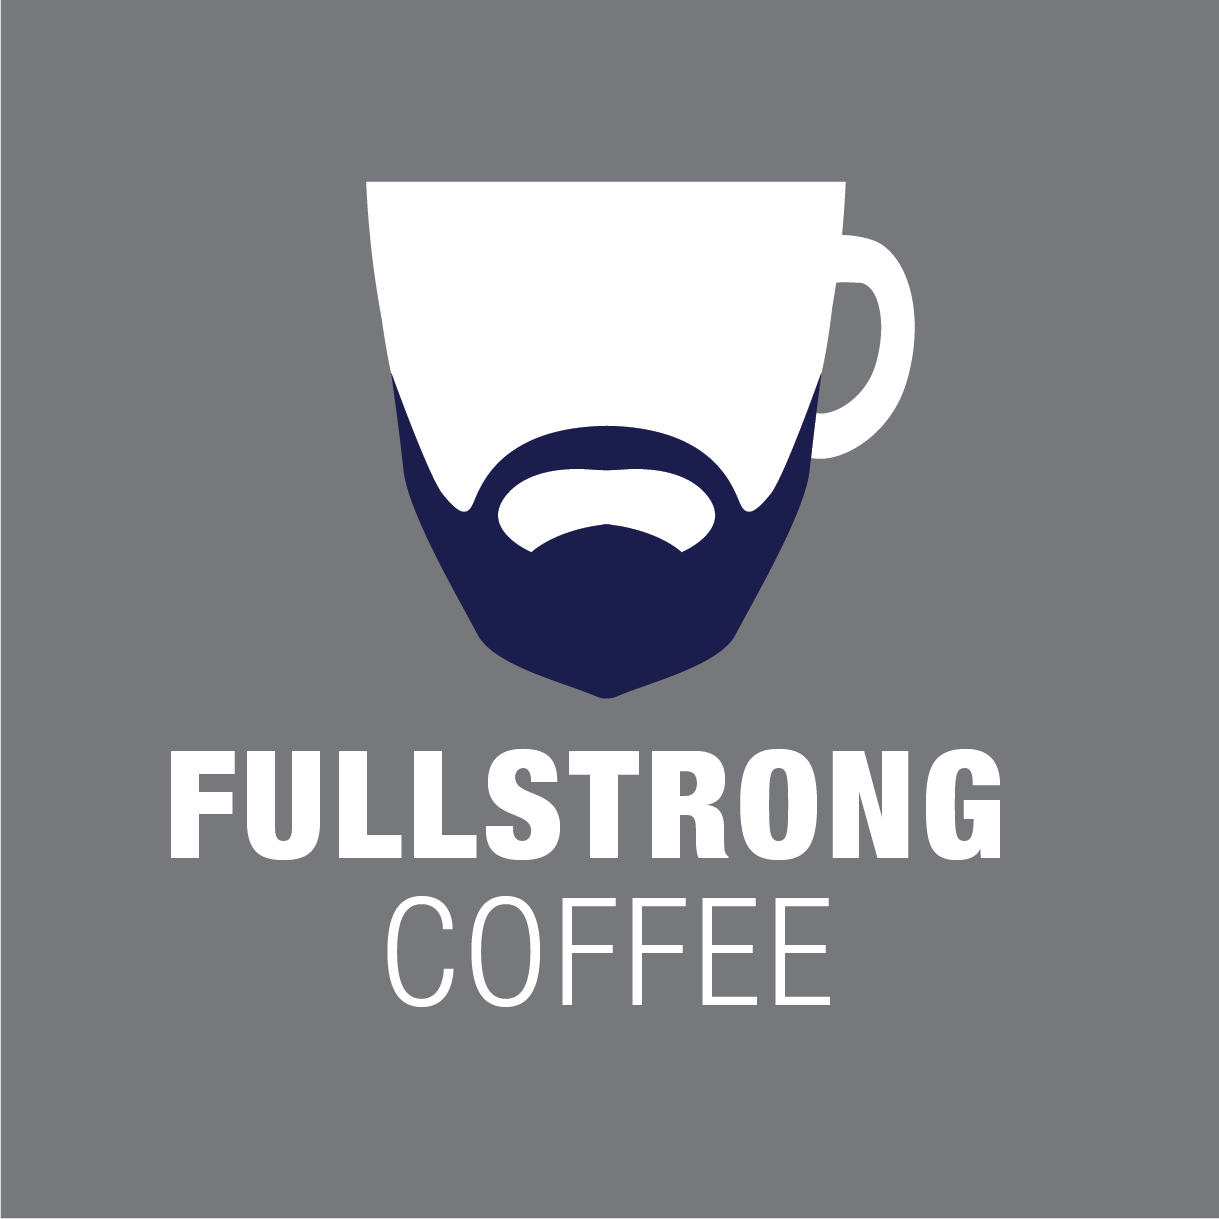 Fullstrong Coffee